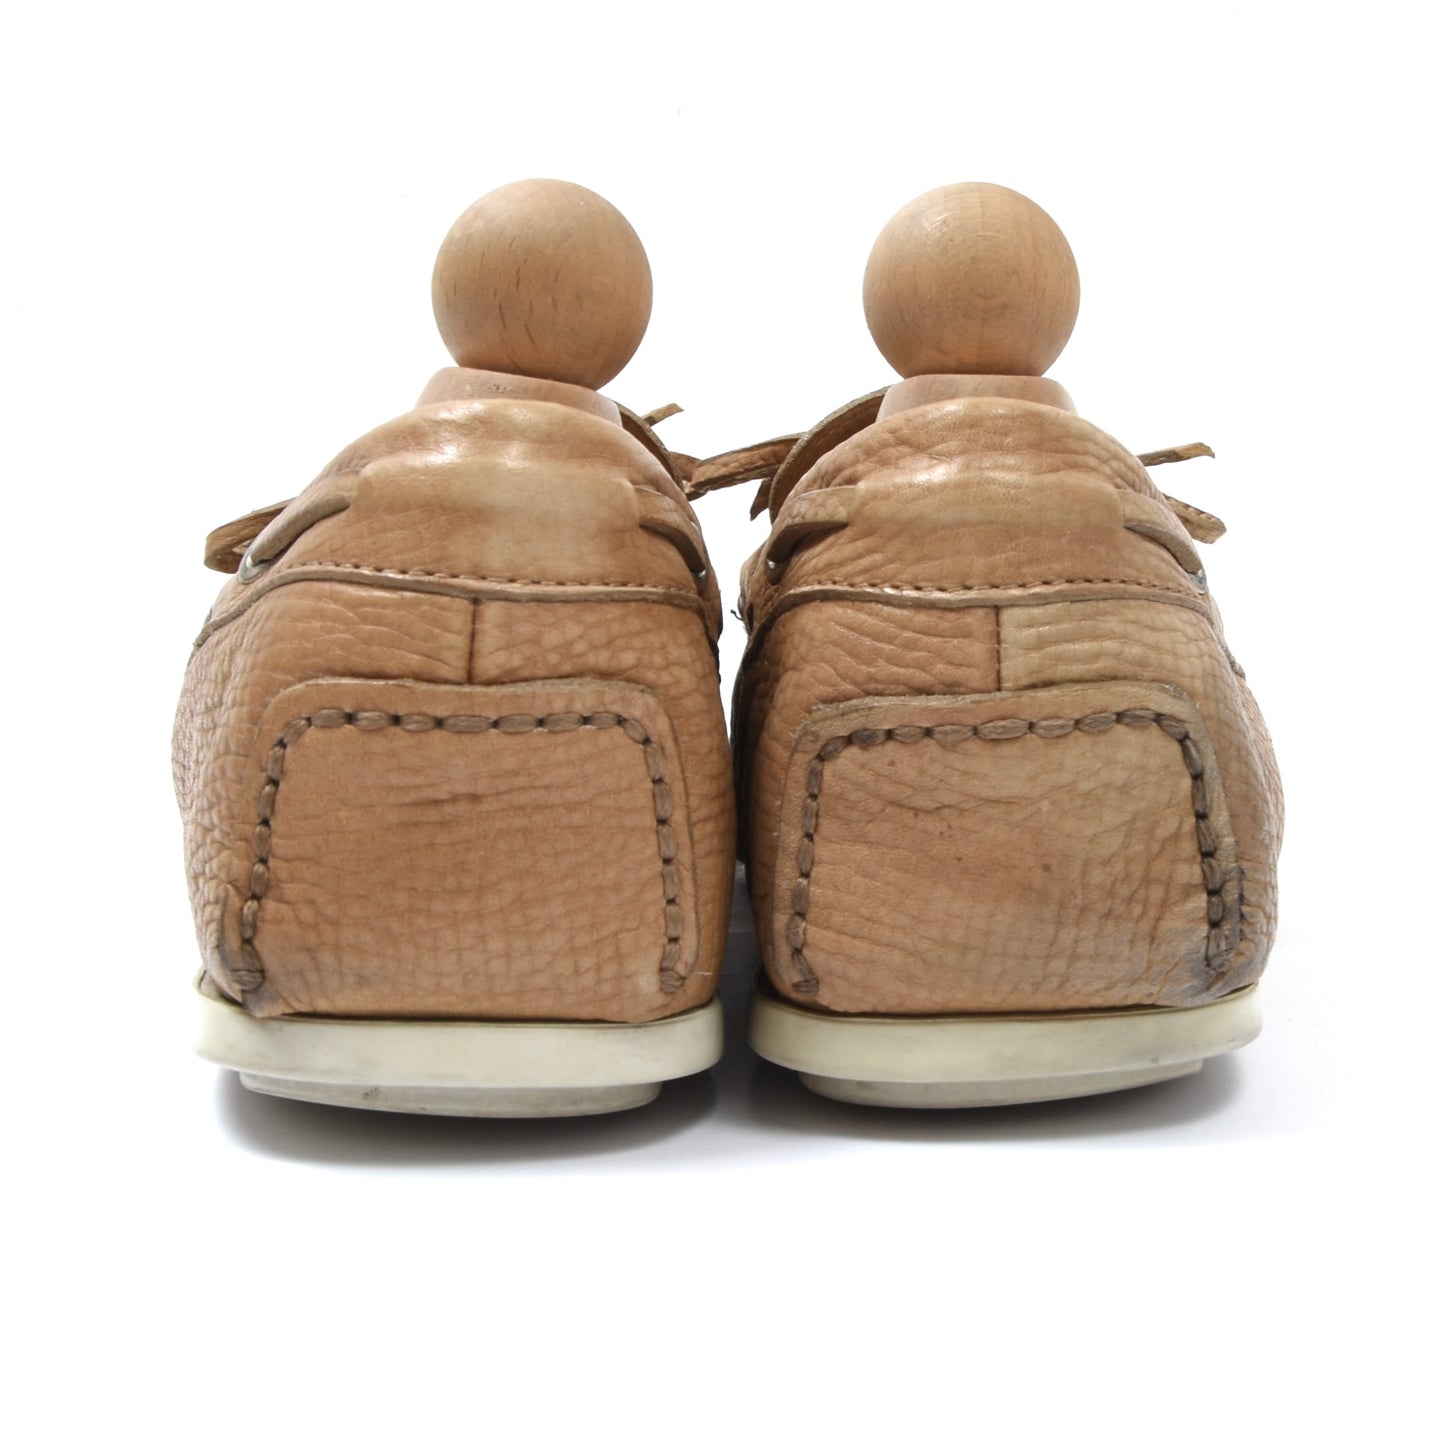 Santoni Leather Loafer Size 8 1/2 - Tan/Beige